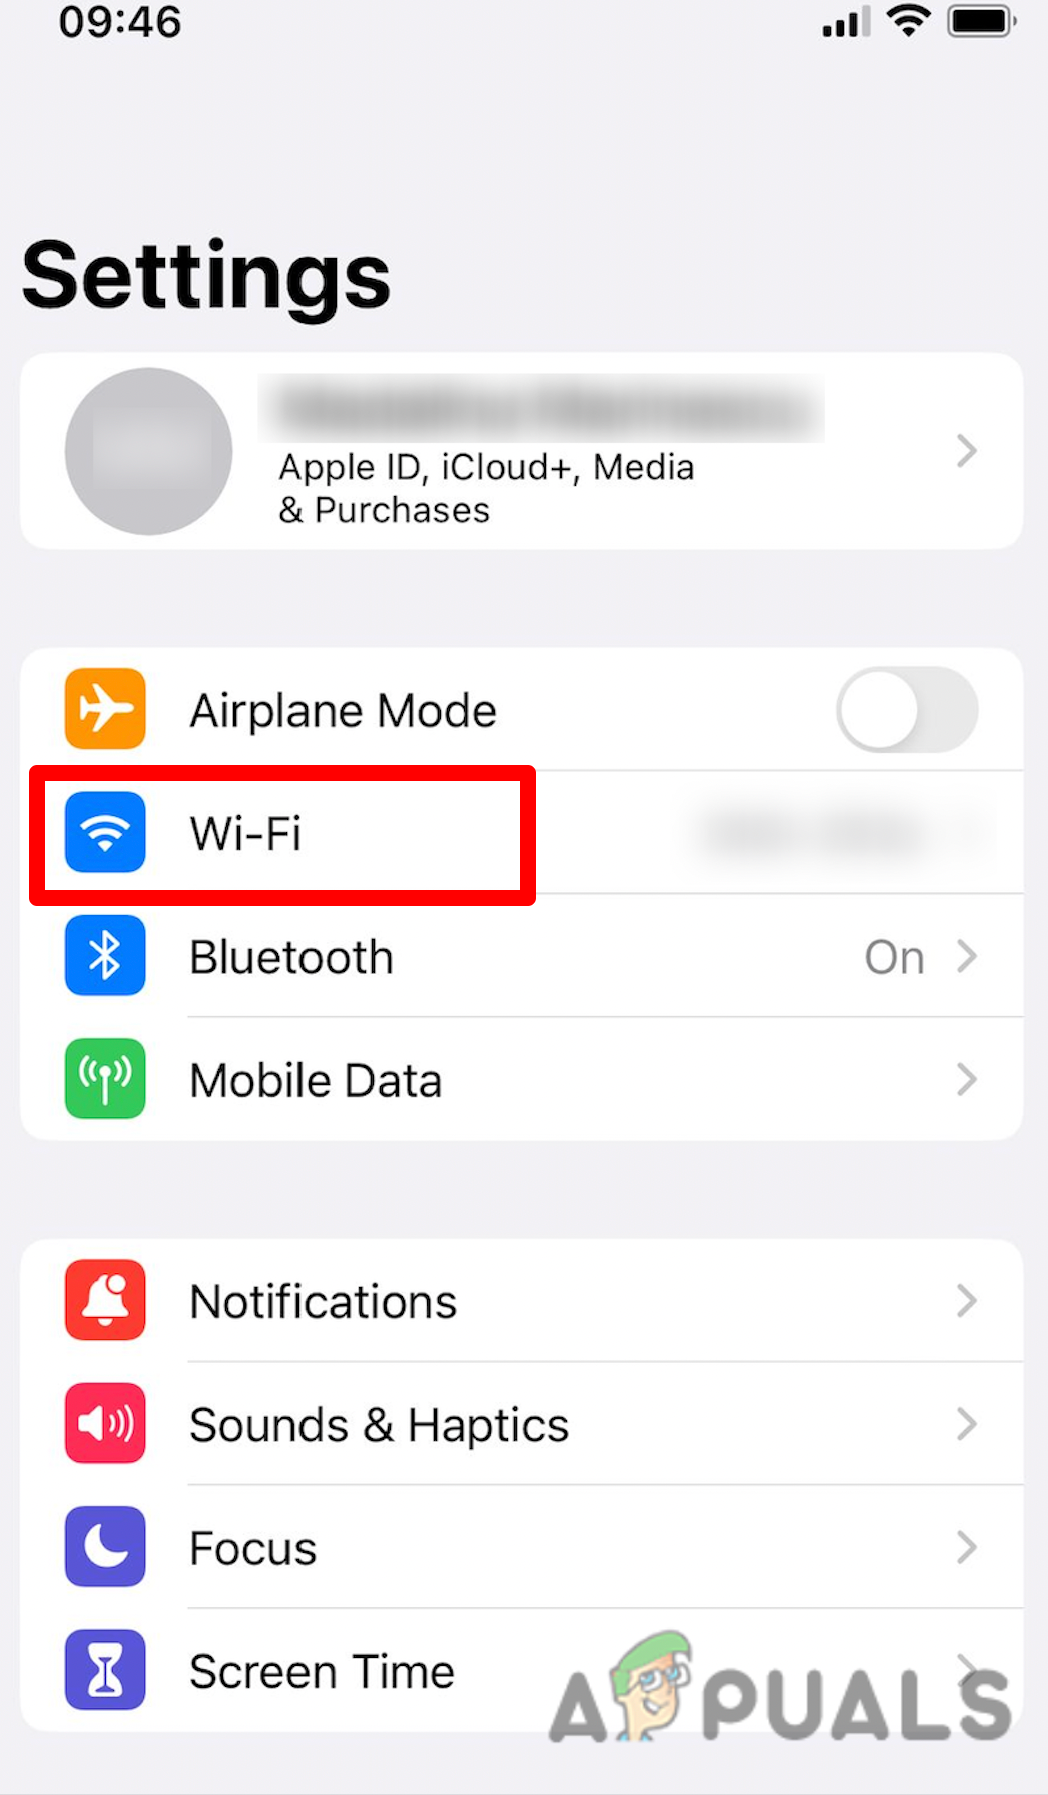 Accessing the Wi-Fi tab on iOS